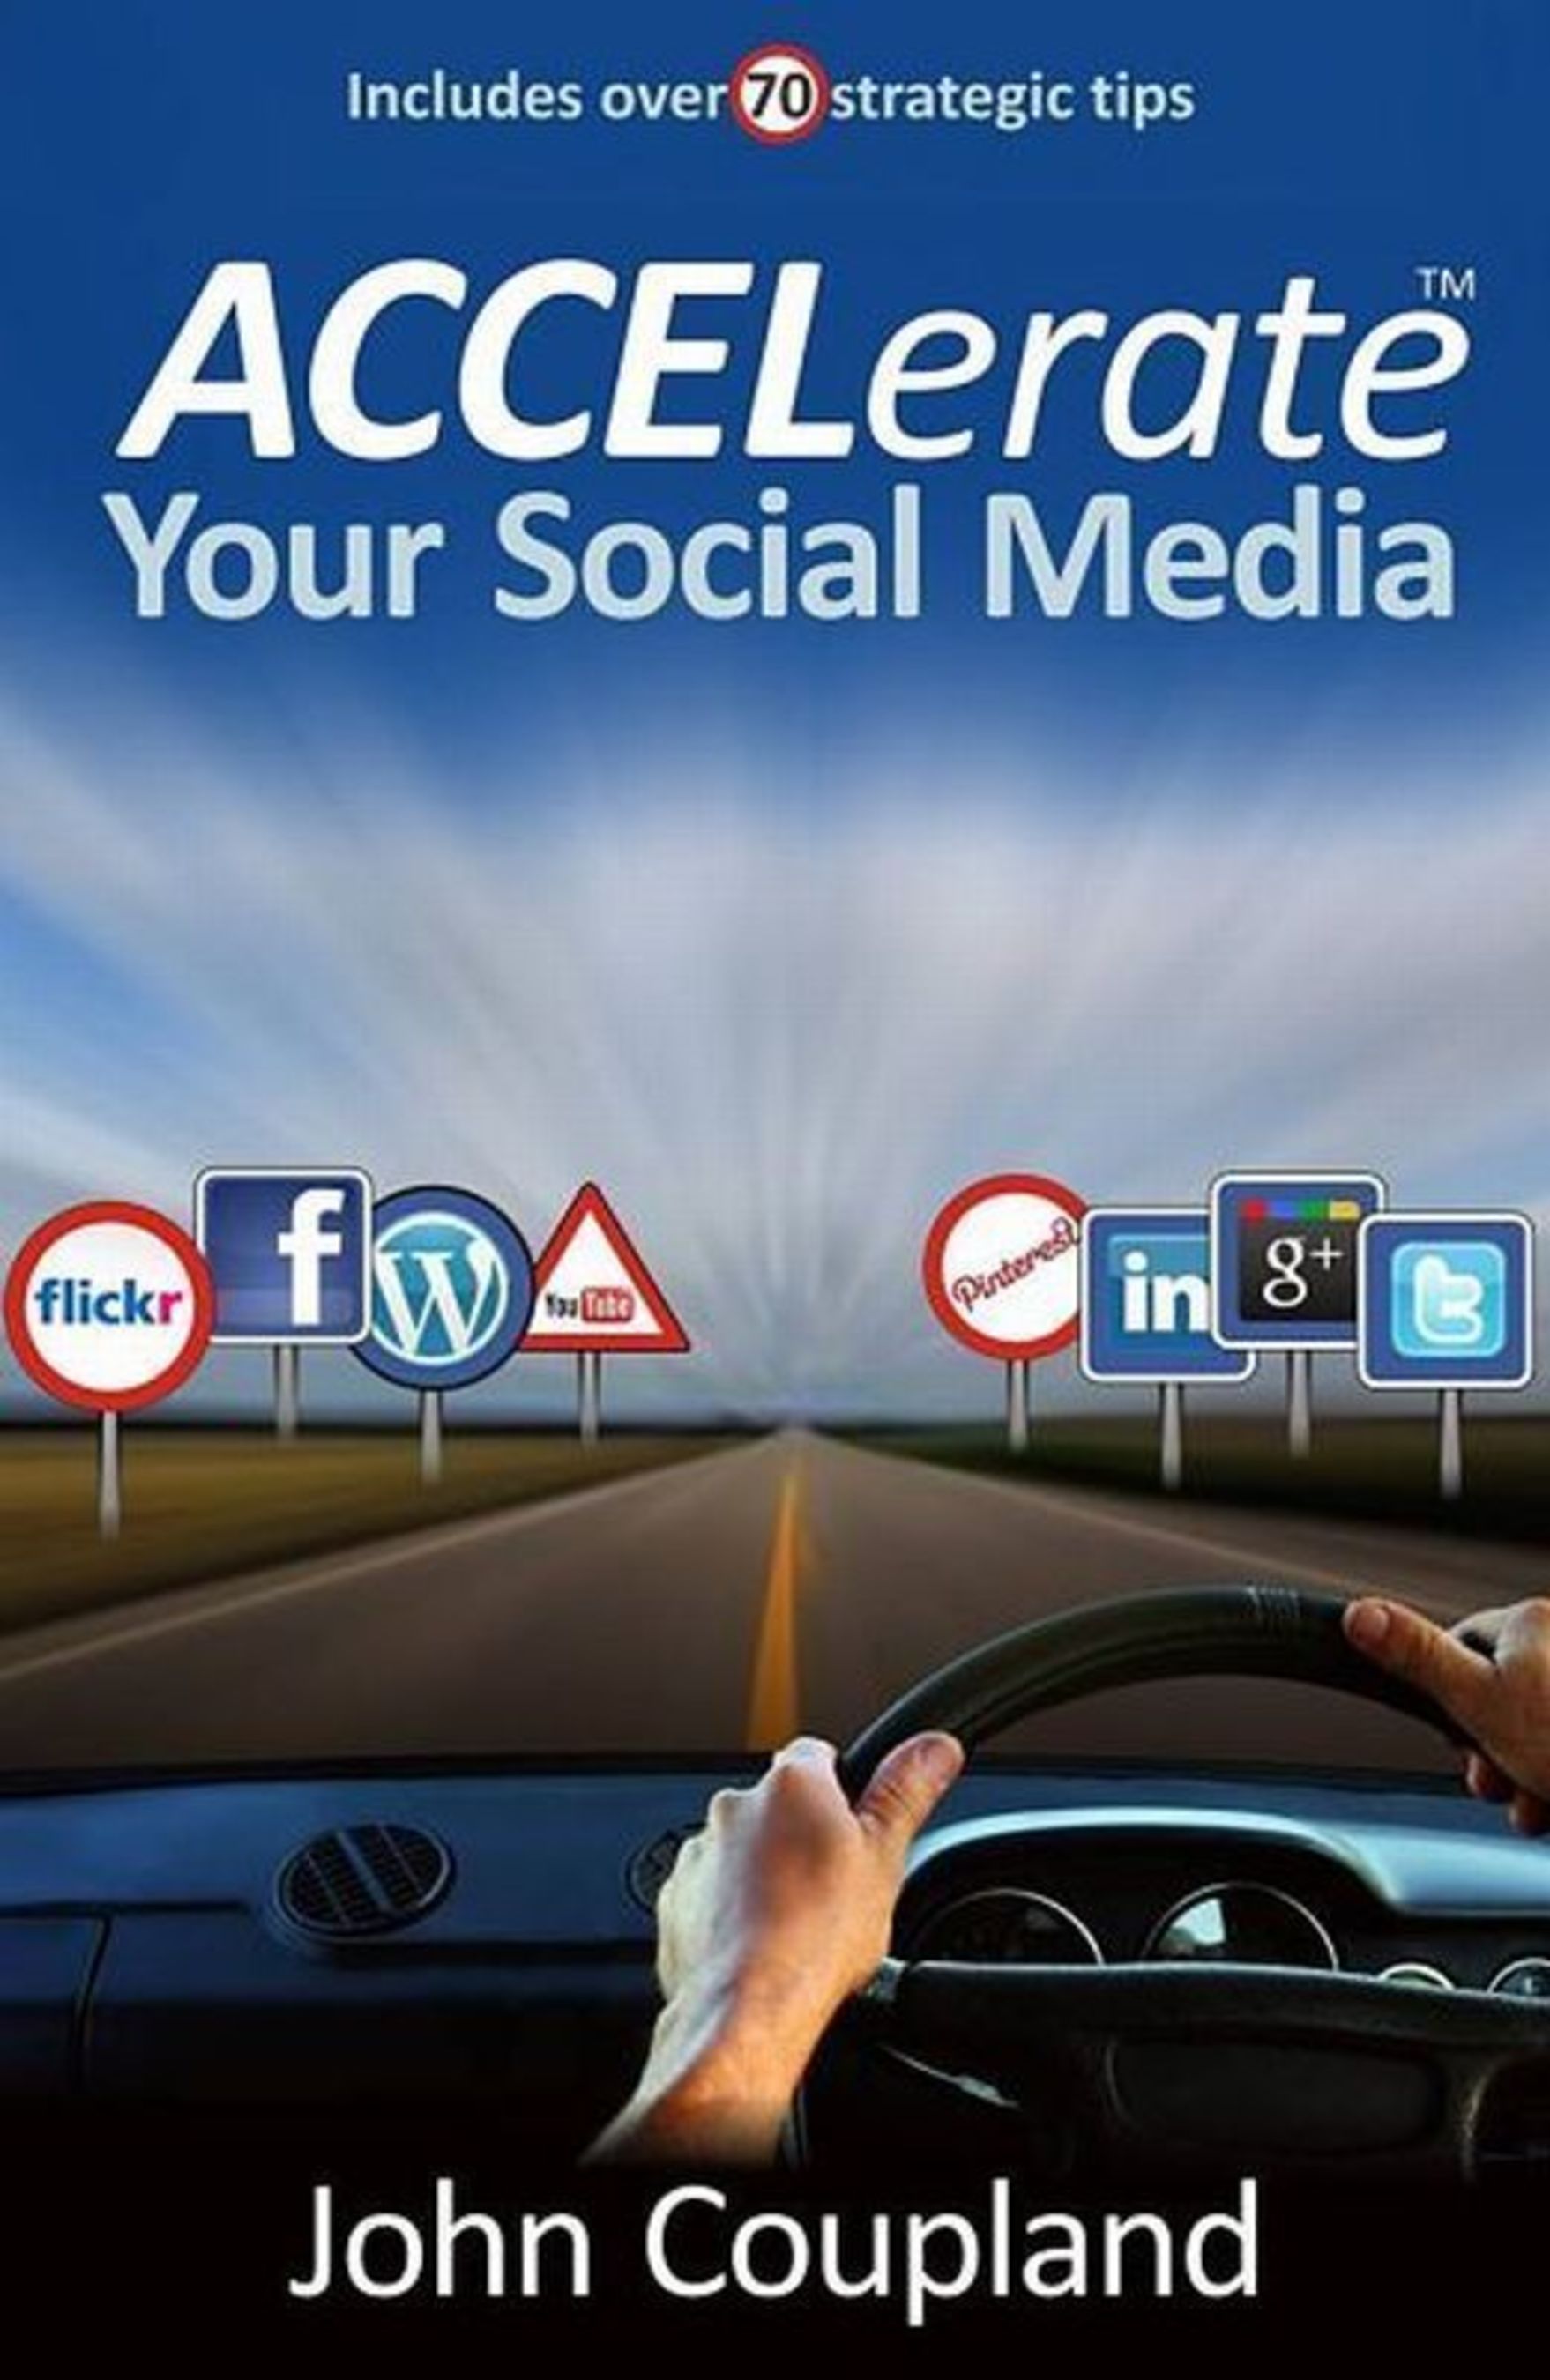 ACCELerate (TM) Your Social Media (PRNewsFoto/networkerplus Social Media)